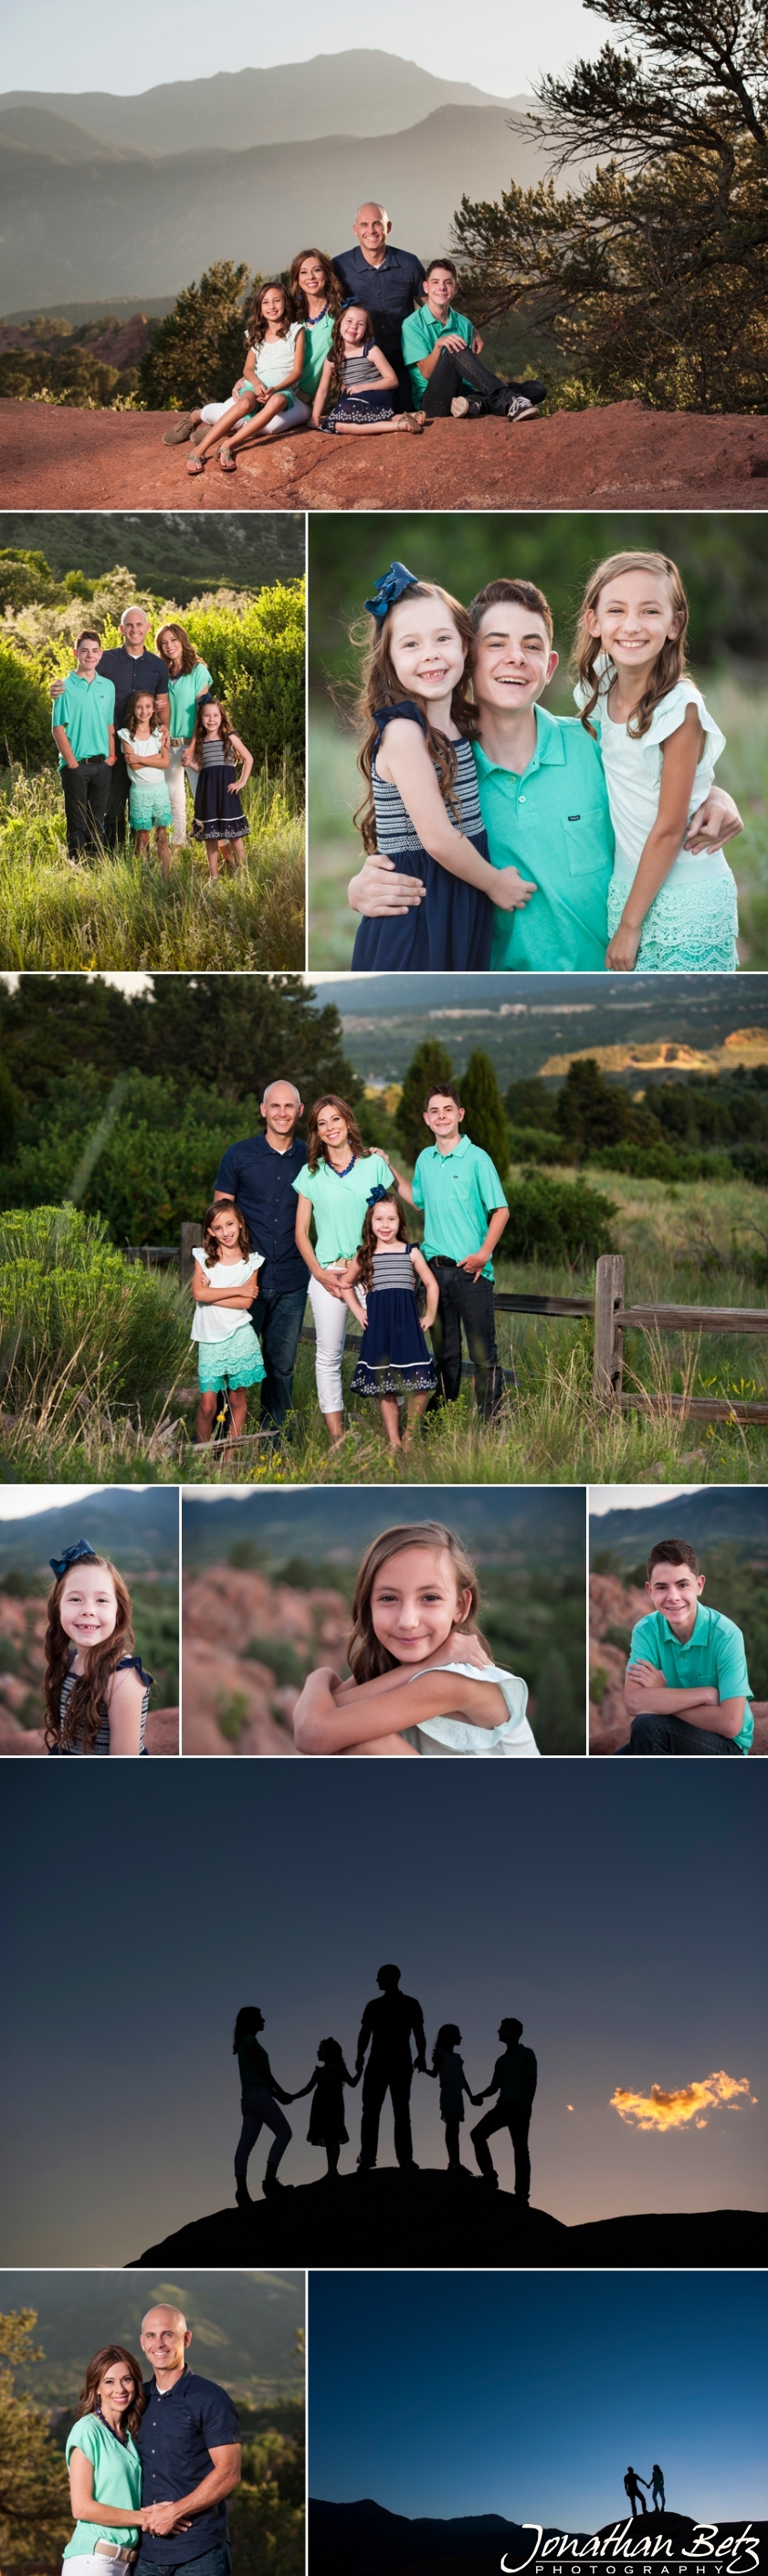 Jonathan Betz Photography Destination Colorado Springs Family Pictures Photographer